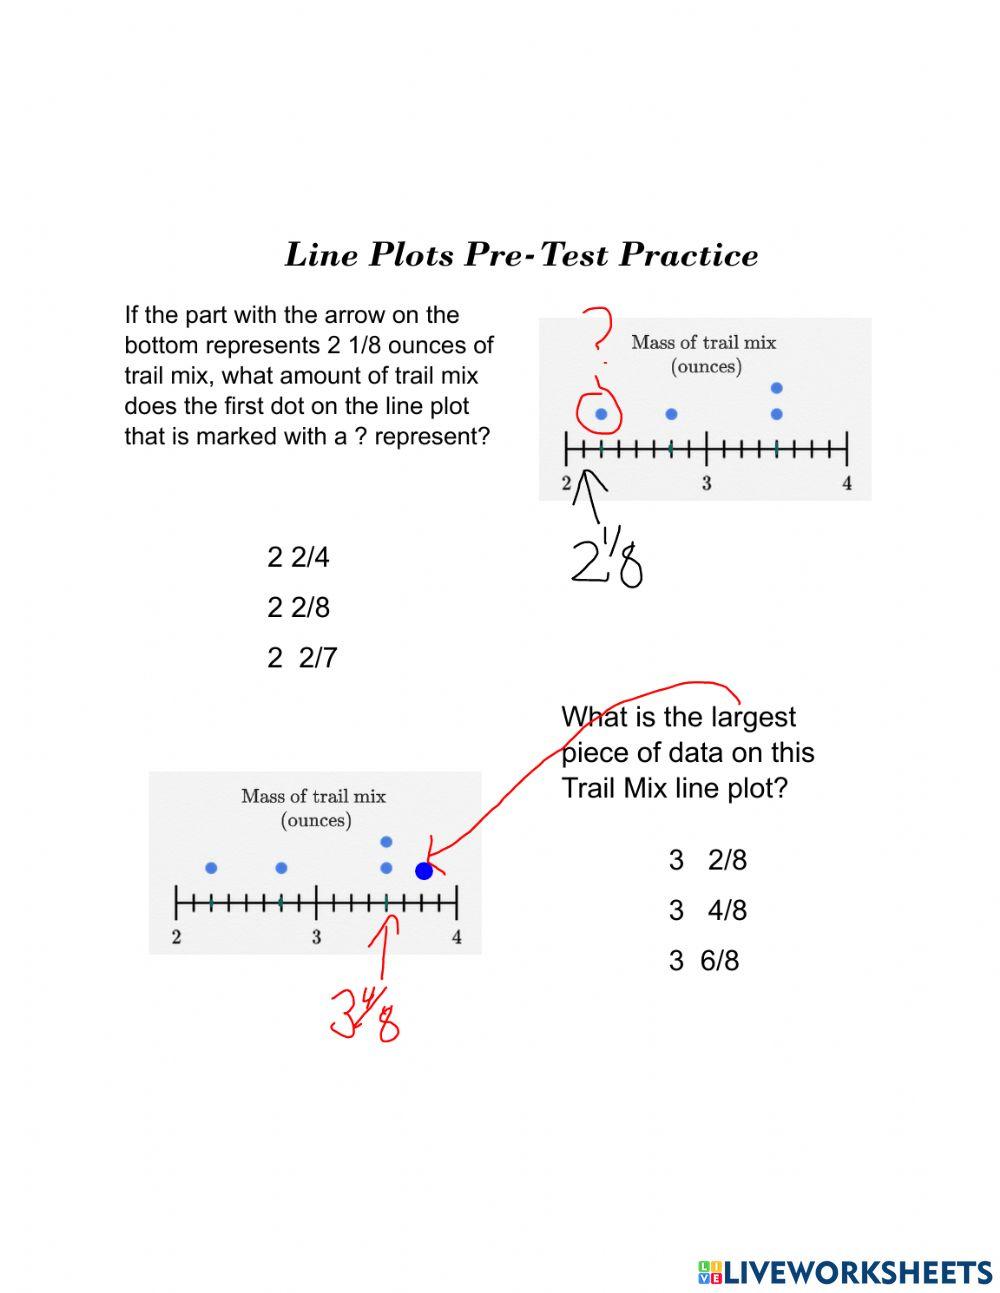 Line Plots Pre-Test Practice